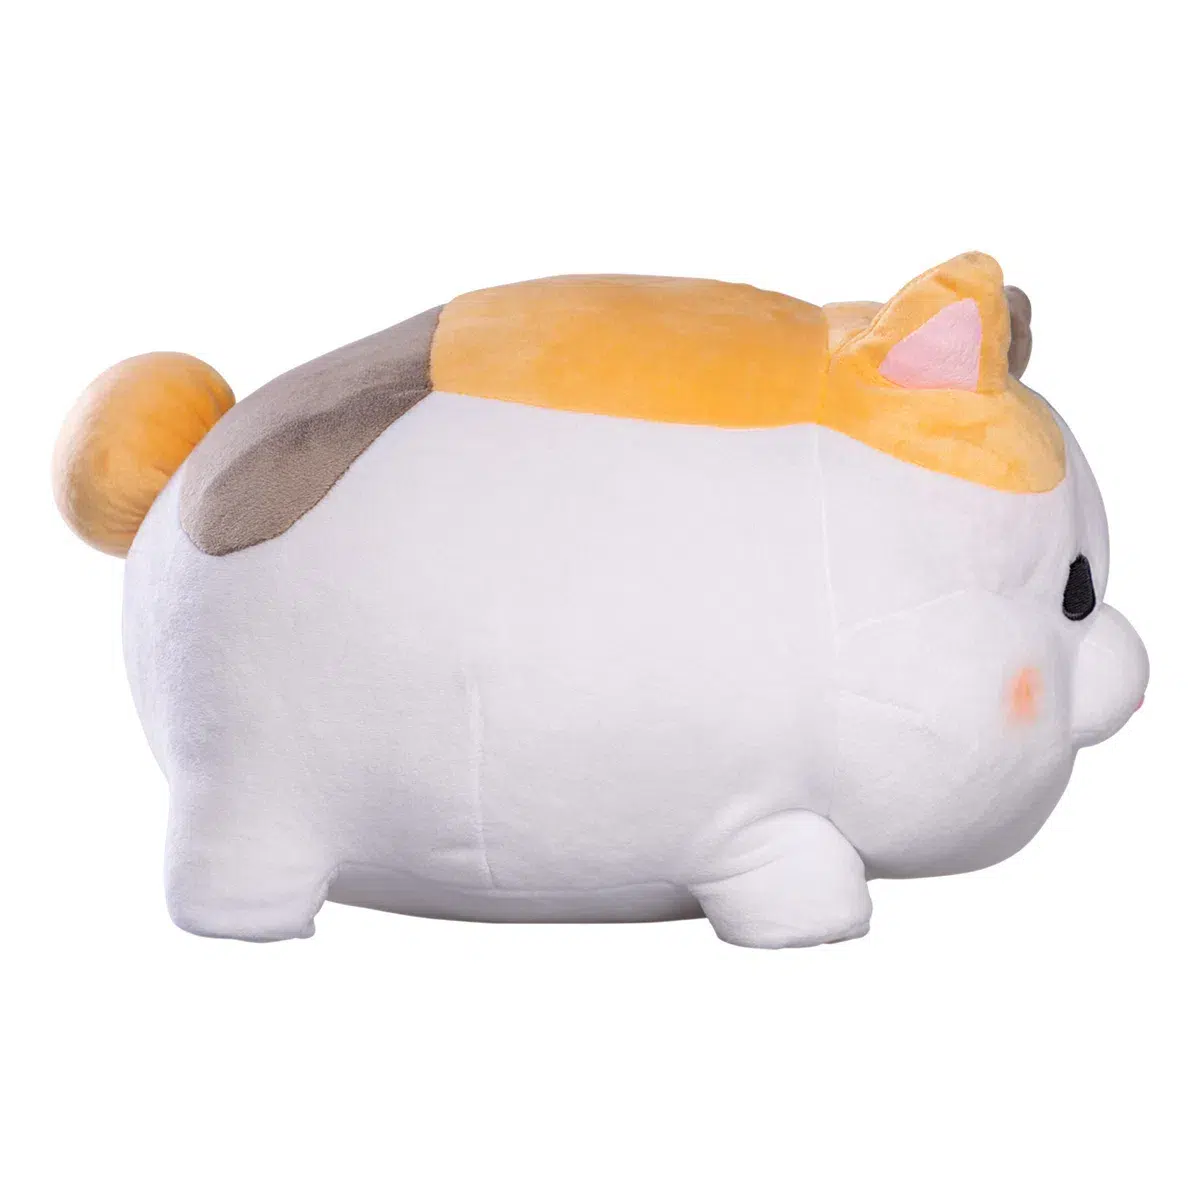 FINAL FANTASY XIV: HEAVENSWARD Soft Toy Cushion - Fat Cat (IT) Image 3